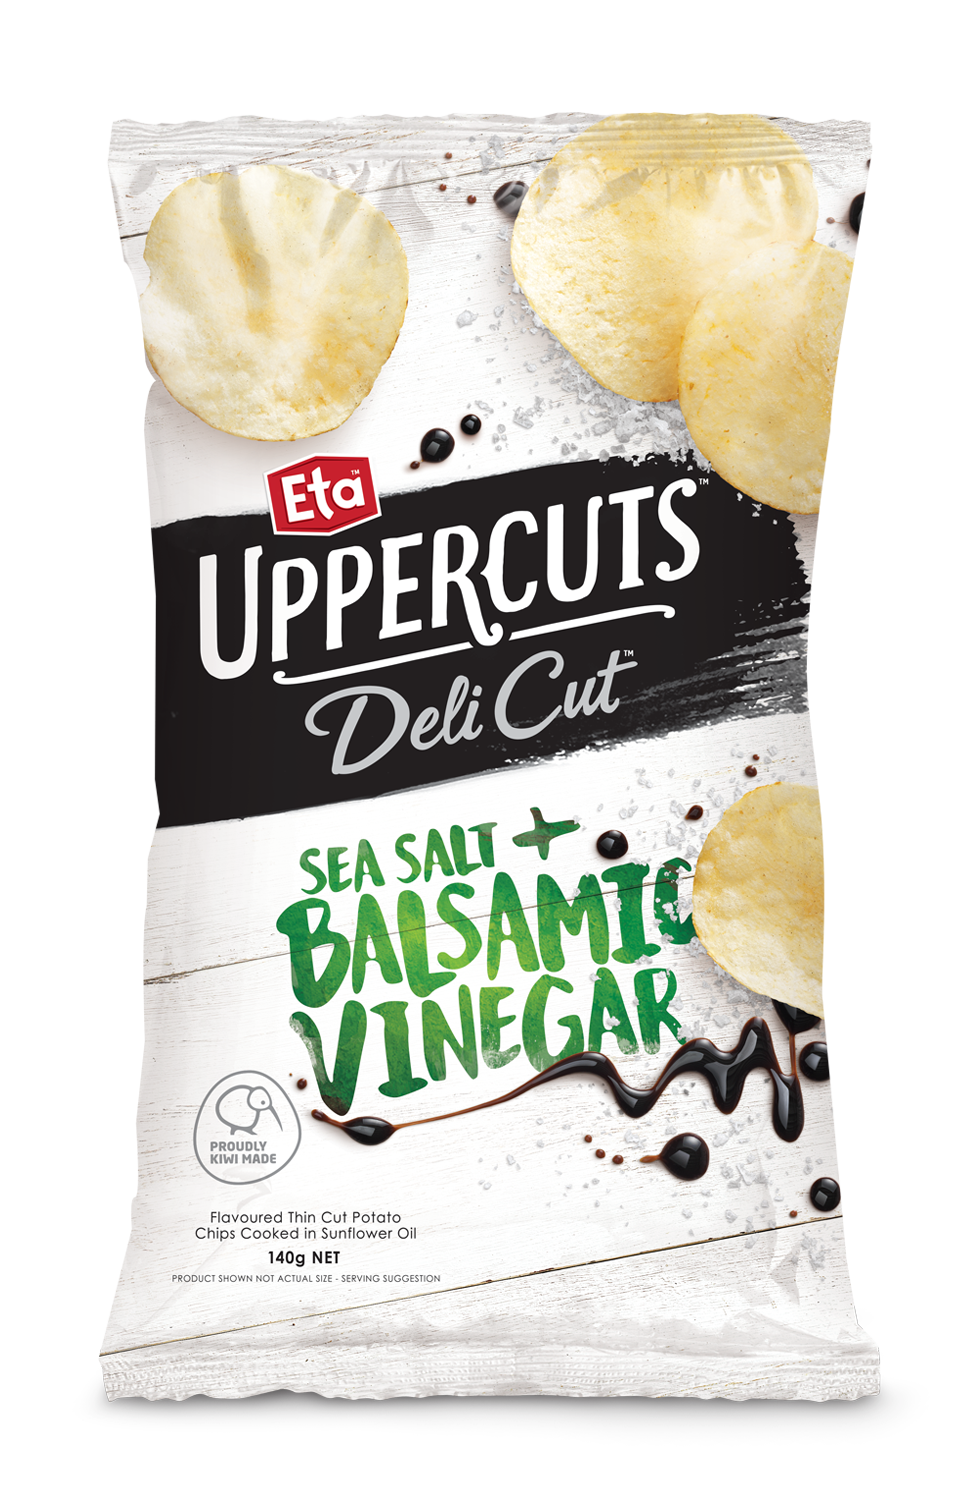 Eta UpperCuts Potato Chips Sea Salt & Balsamic Vinegar